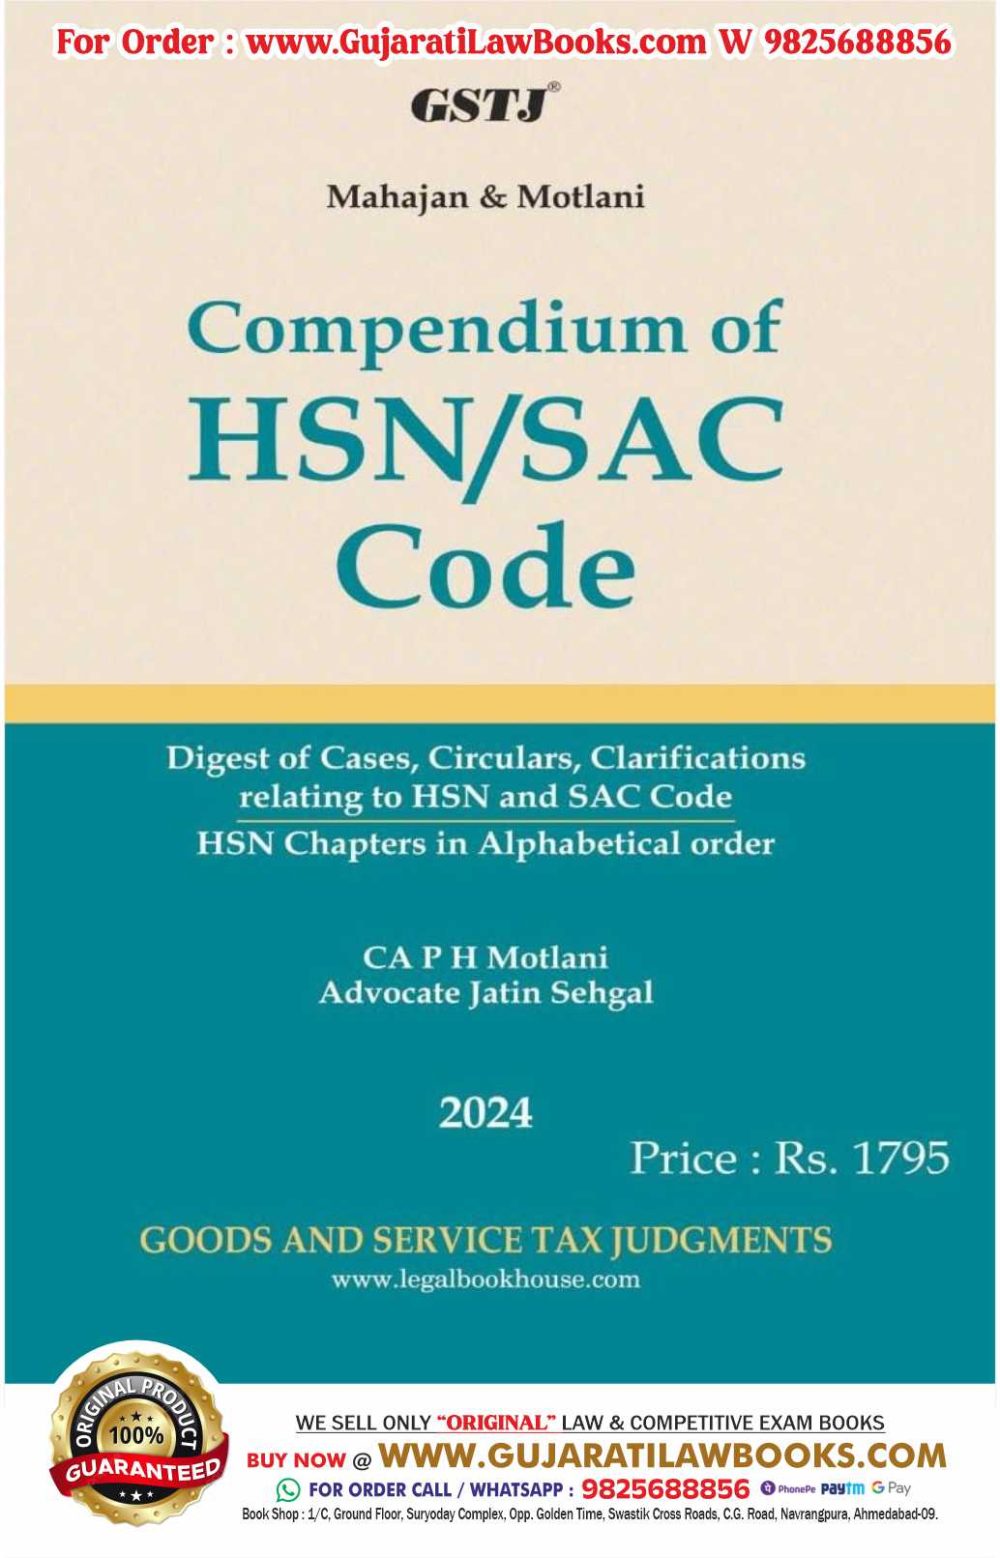 Compendium of HSN / SAC Code by Mahajan & Motlani - Latest March 2024 Edition